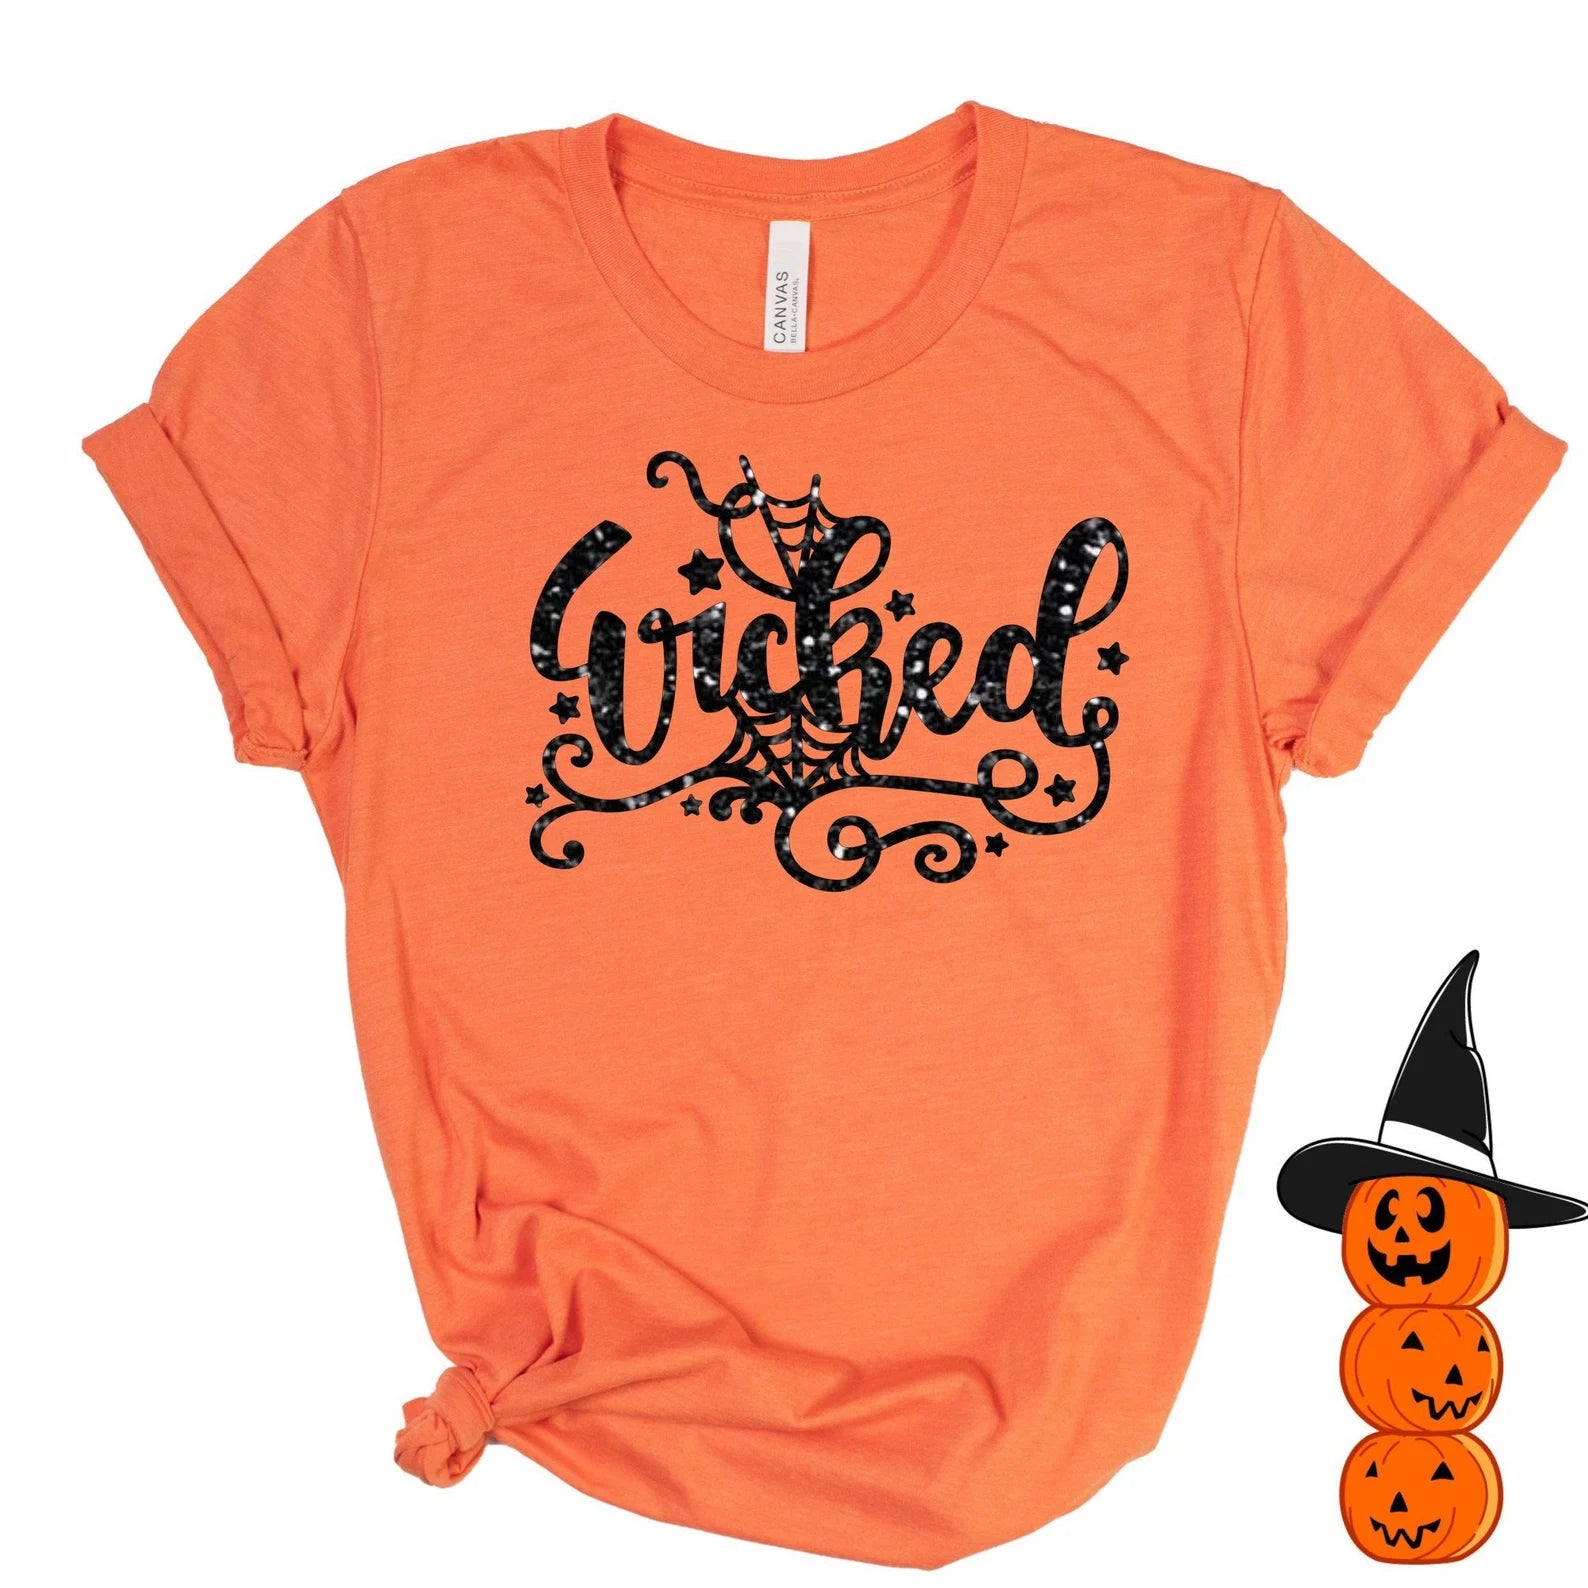 Womens Orange Wicked Halloween tshirt with spider webs